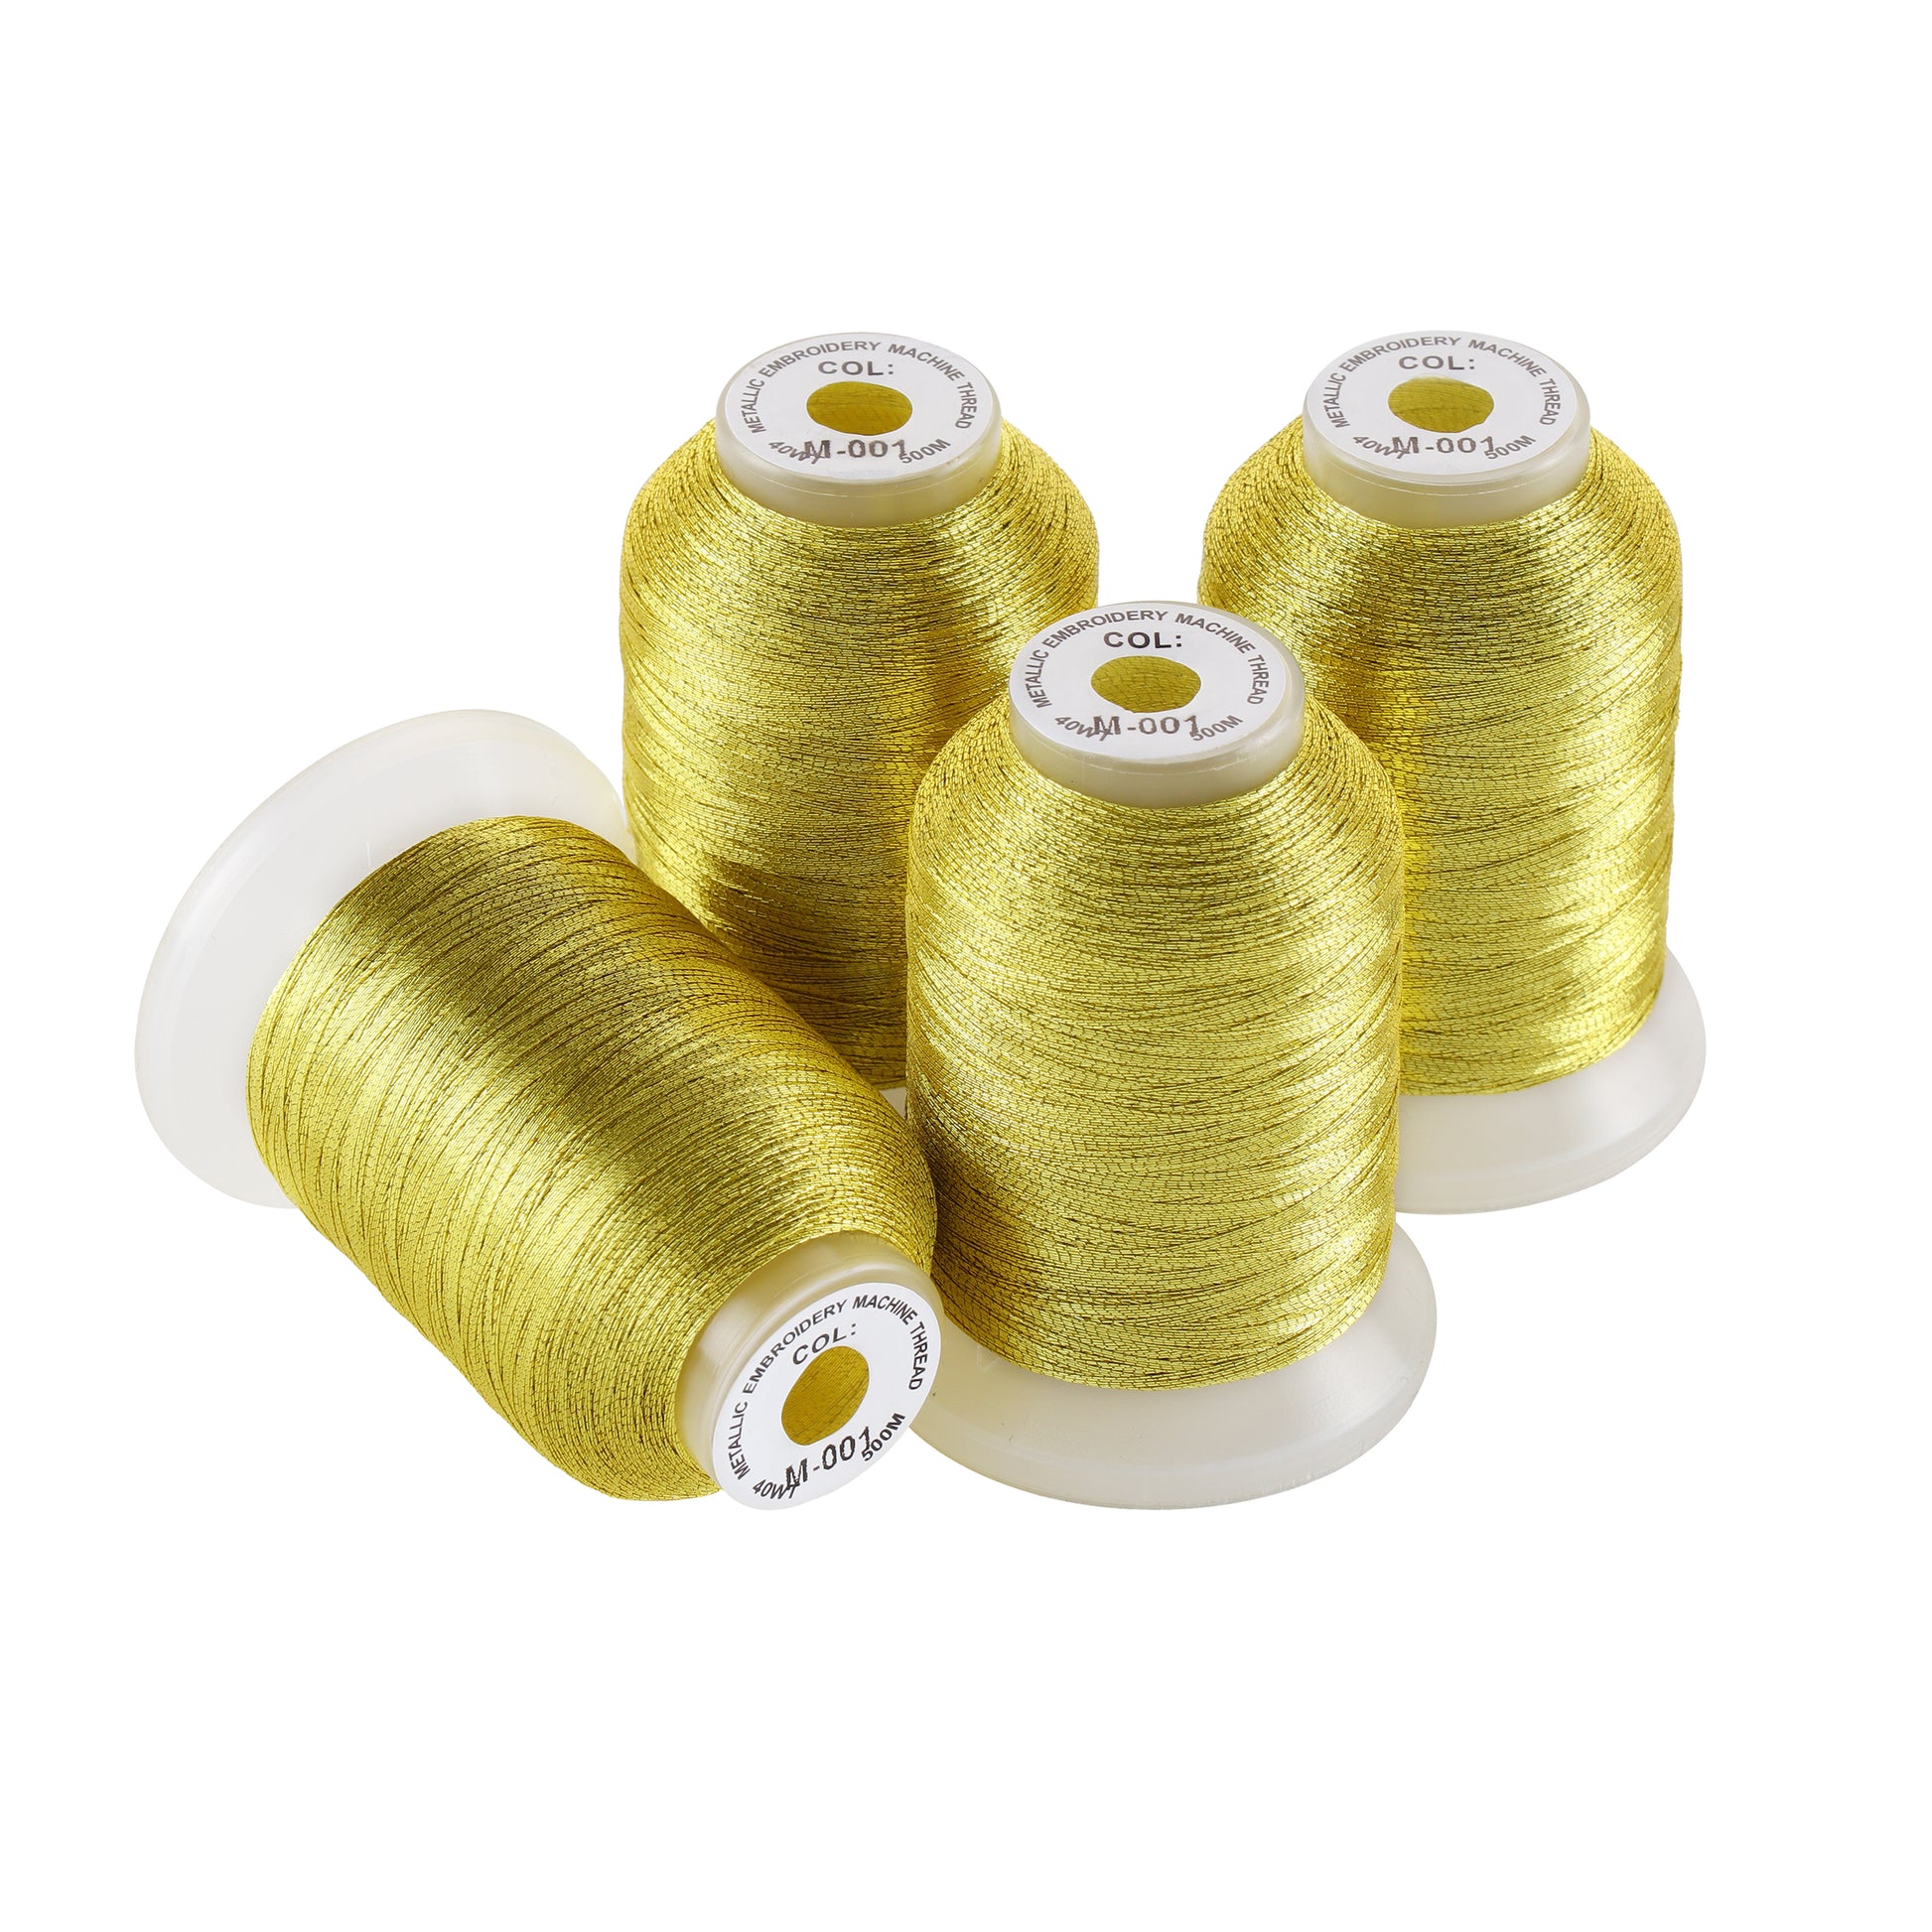 New brothread 4 Gold Metallic Embroidery Machine Thread Kit 500M (550Y